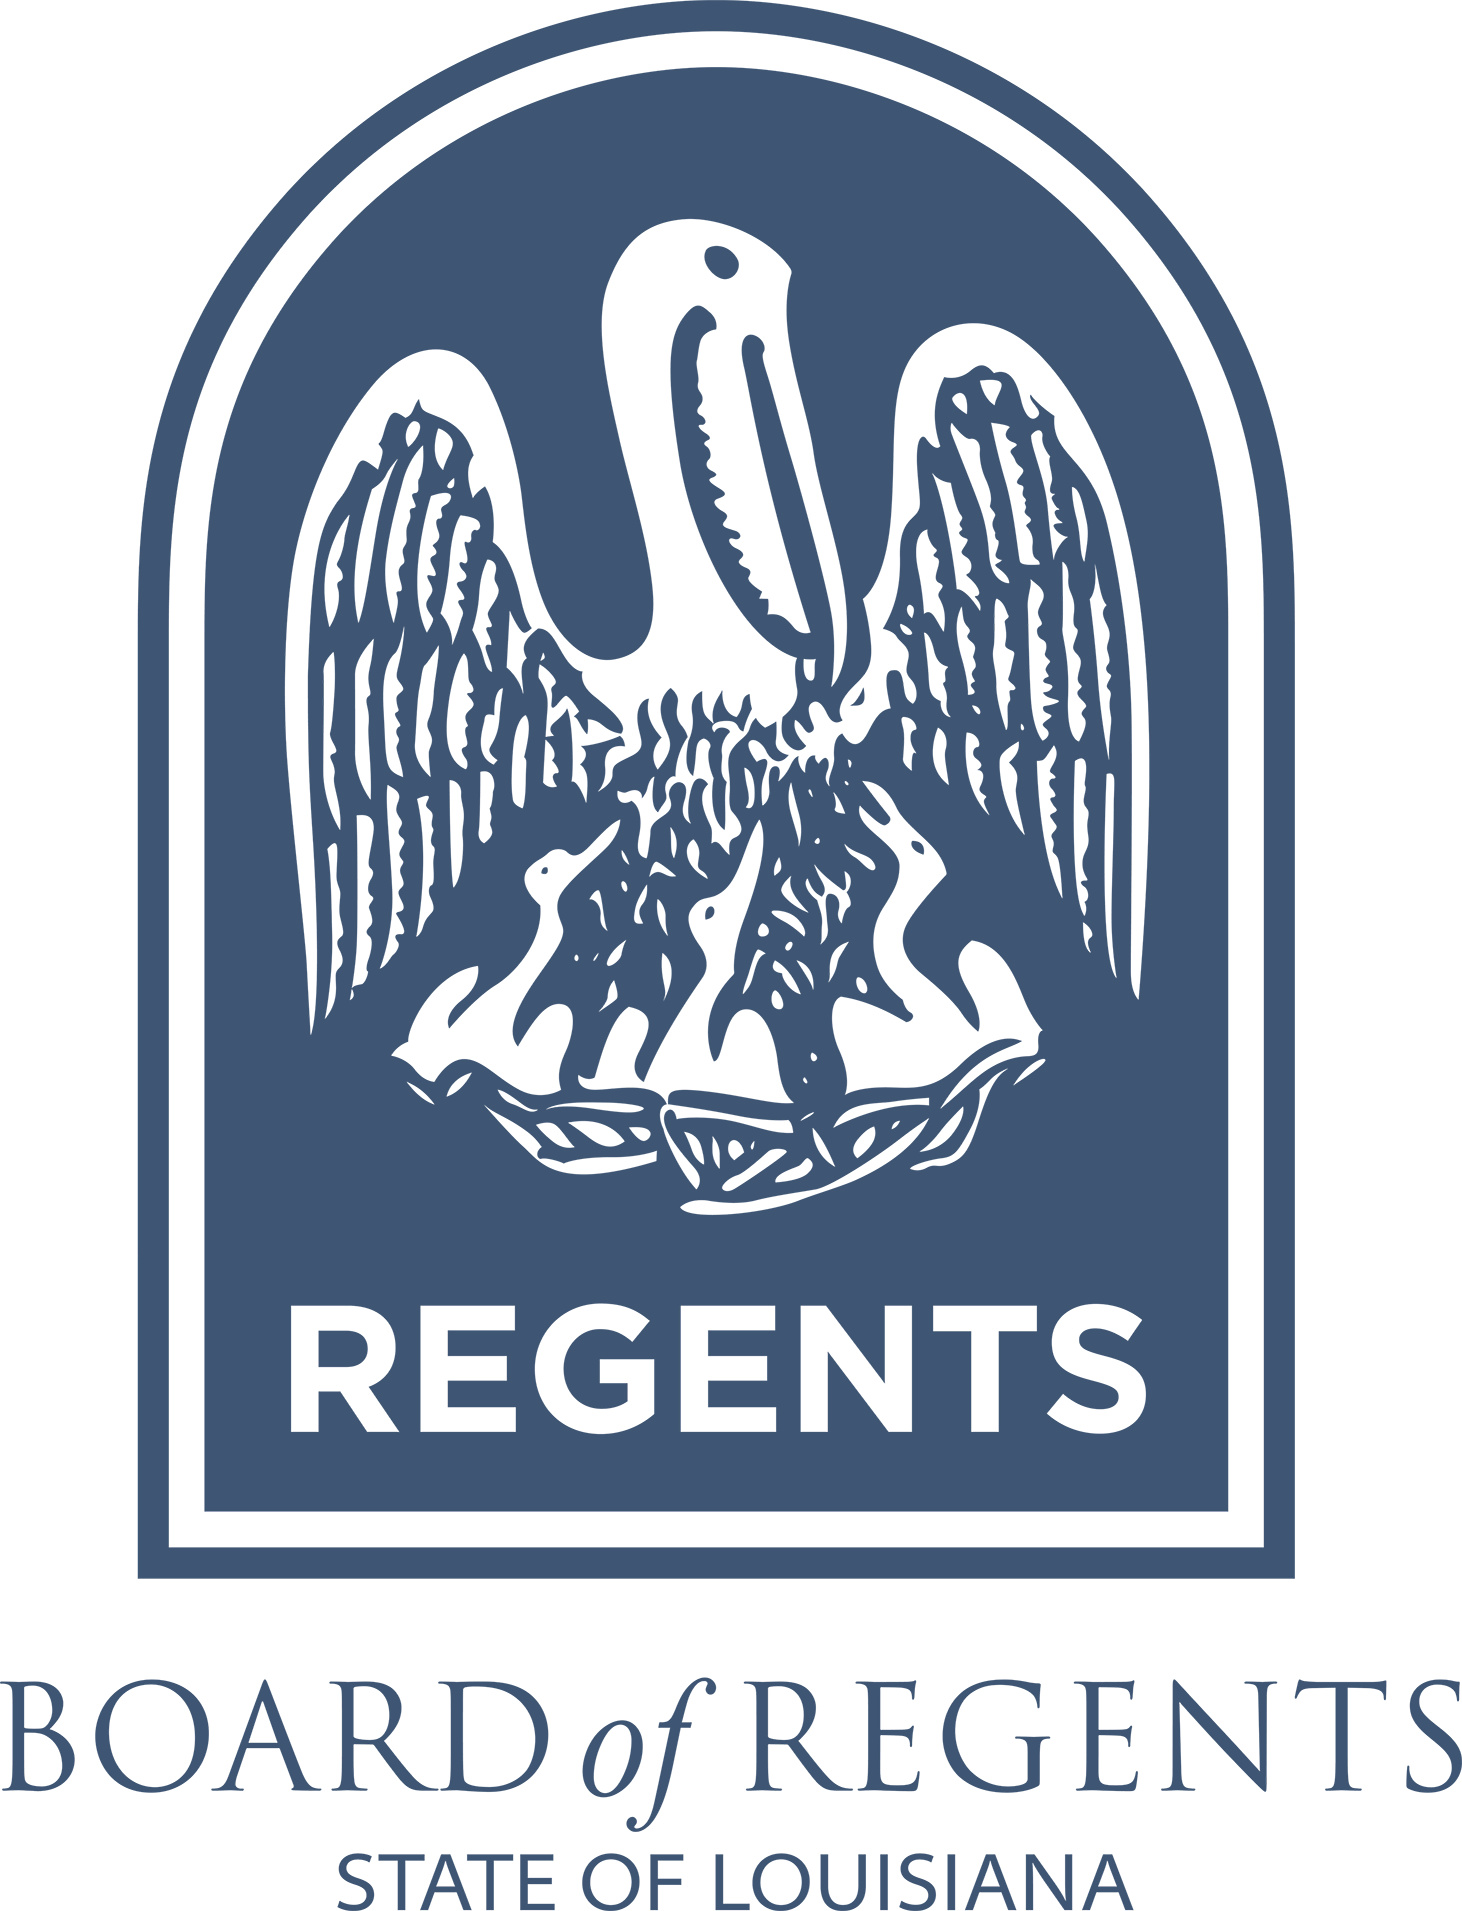 louisiana board of regents logo